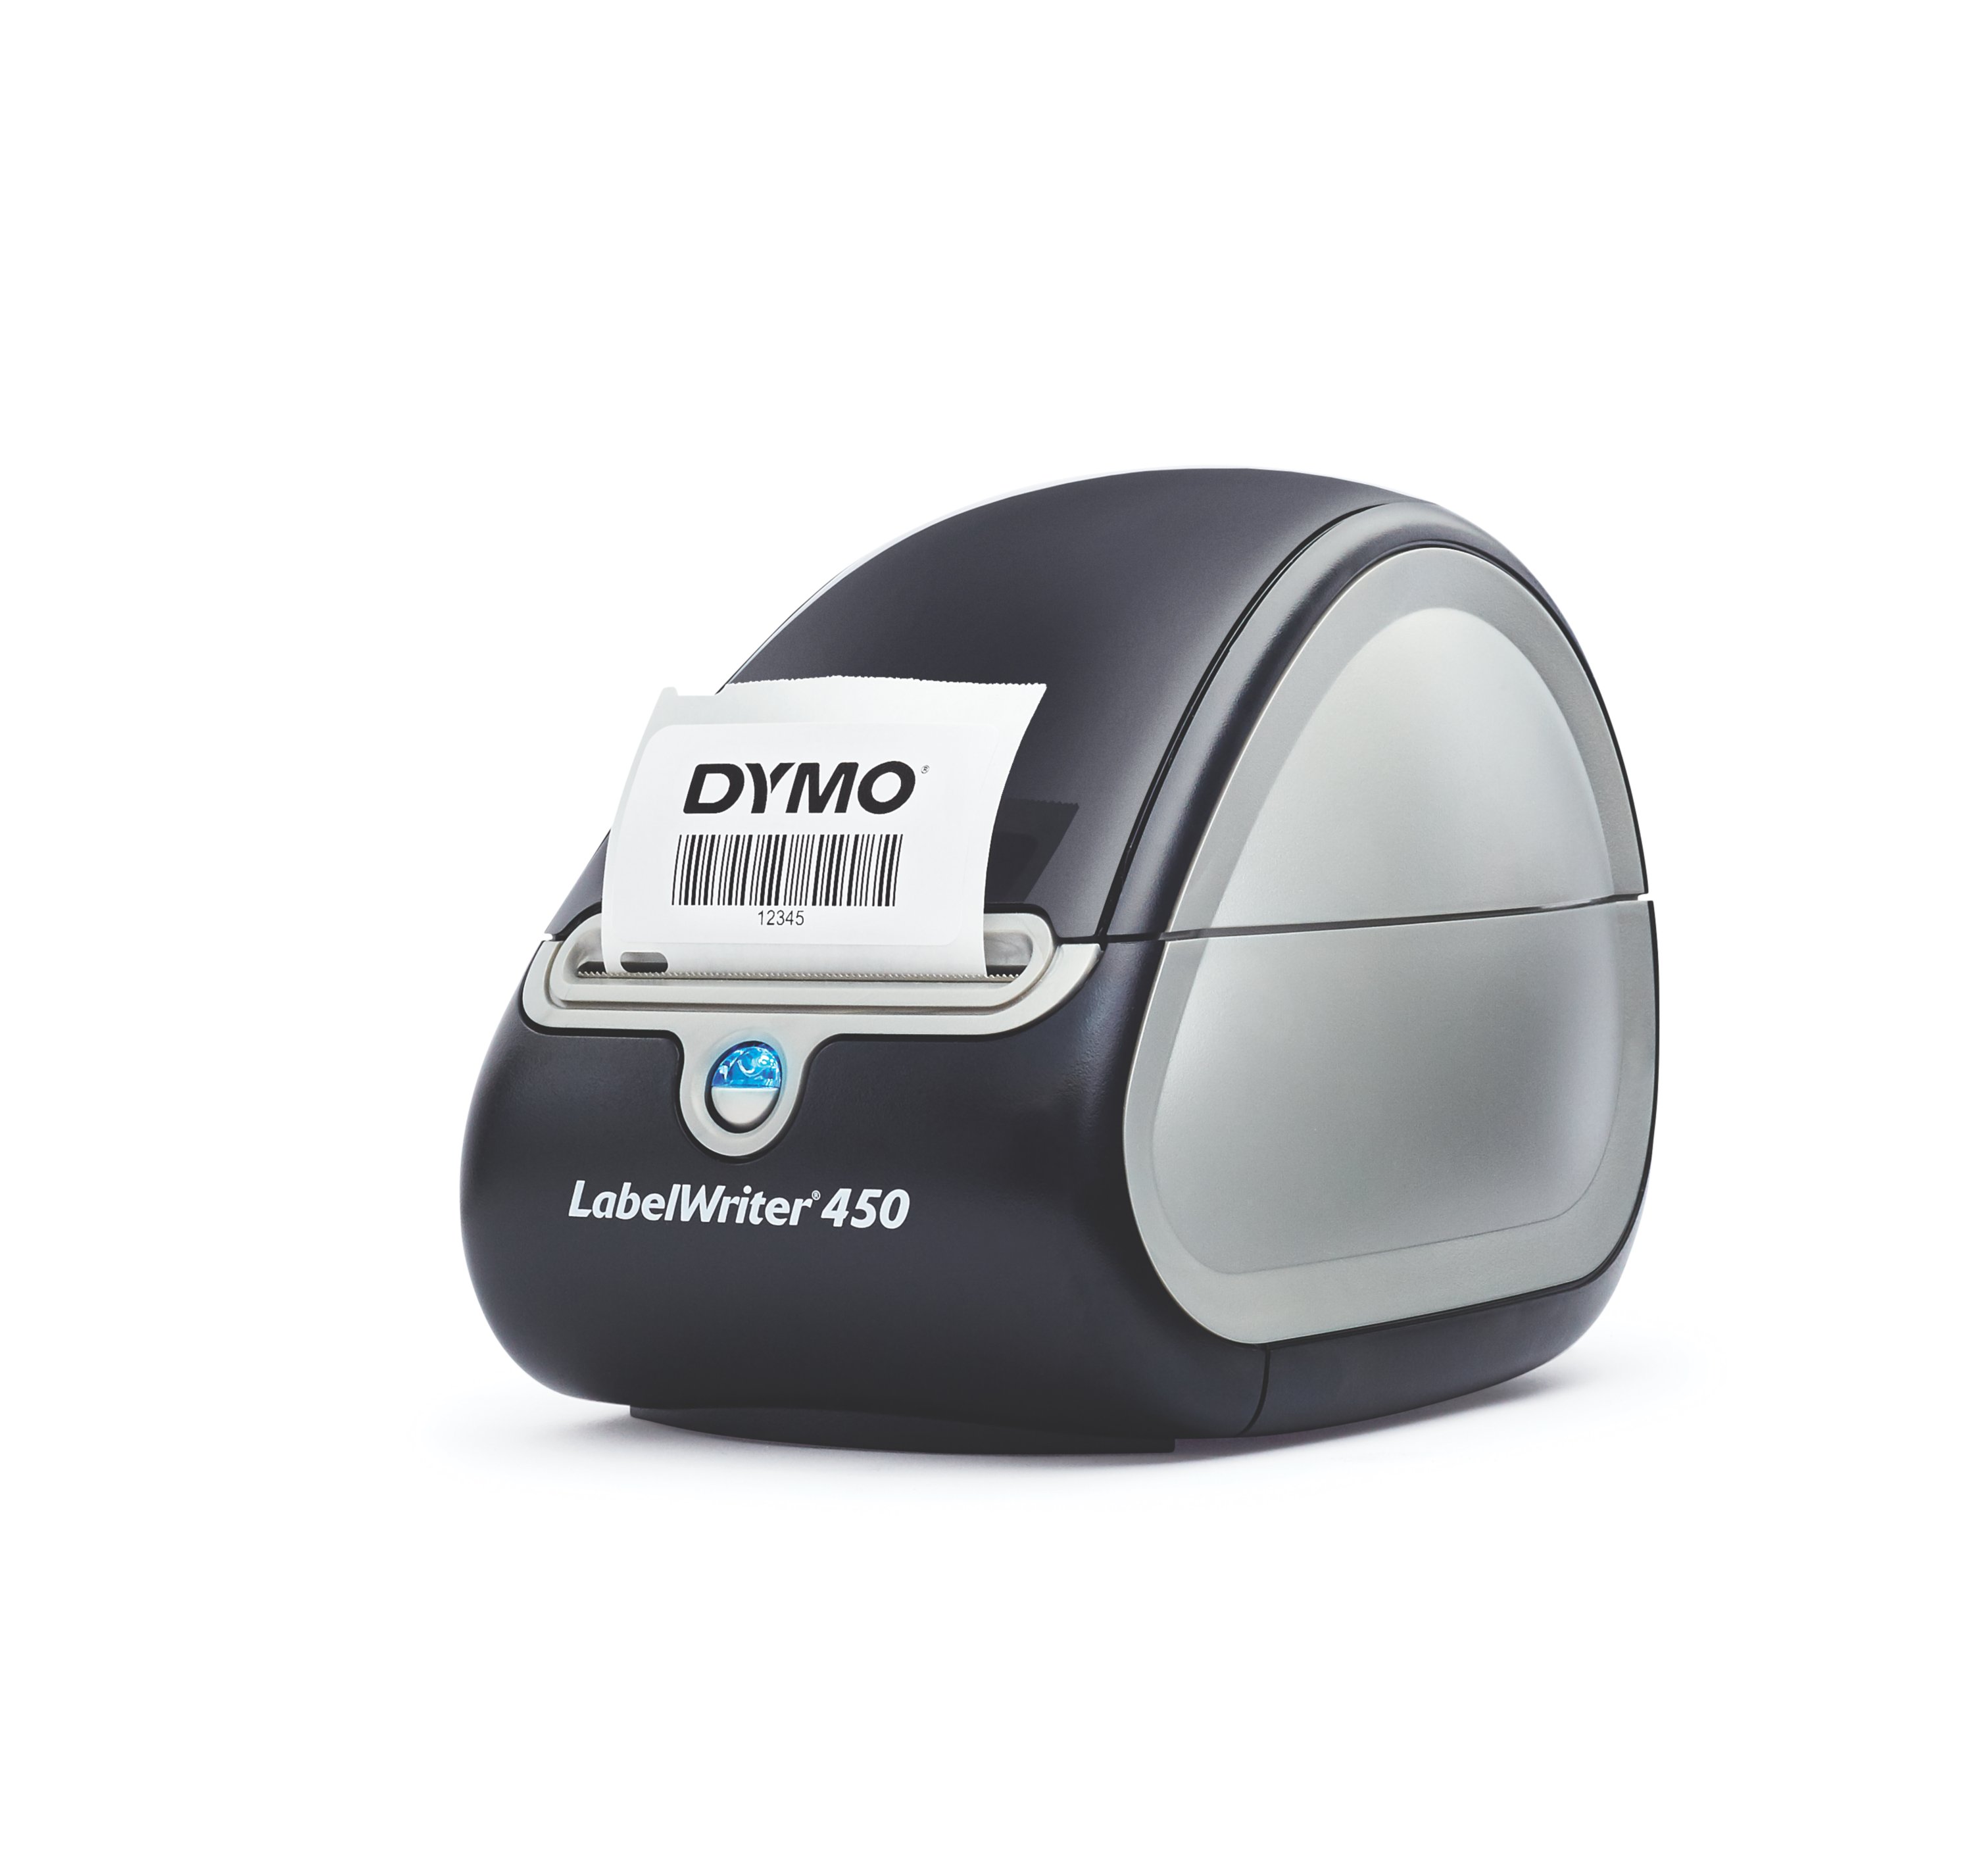 Dymo labelwriter 450 software download for mac dg go app scanner